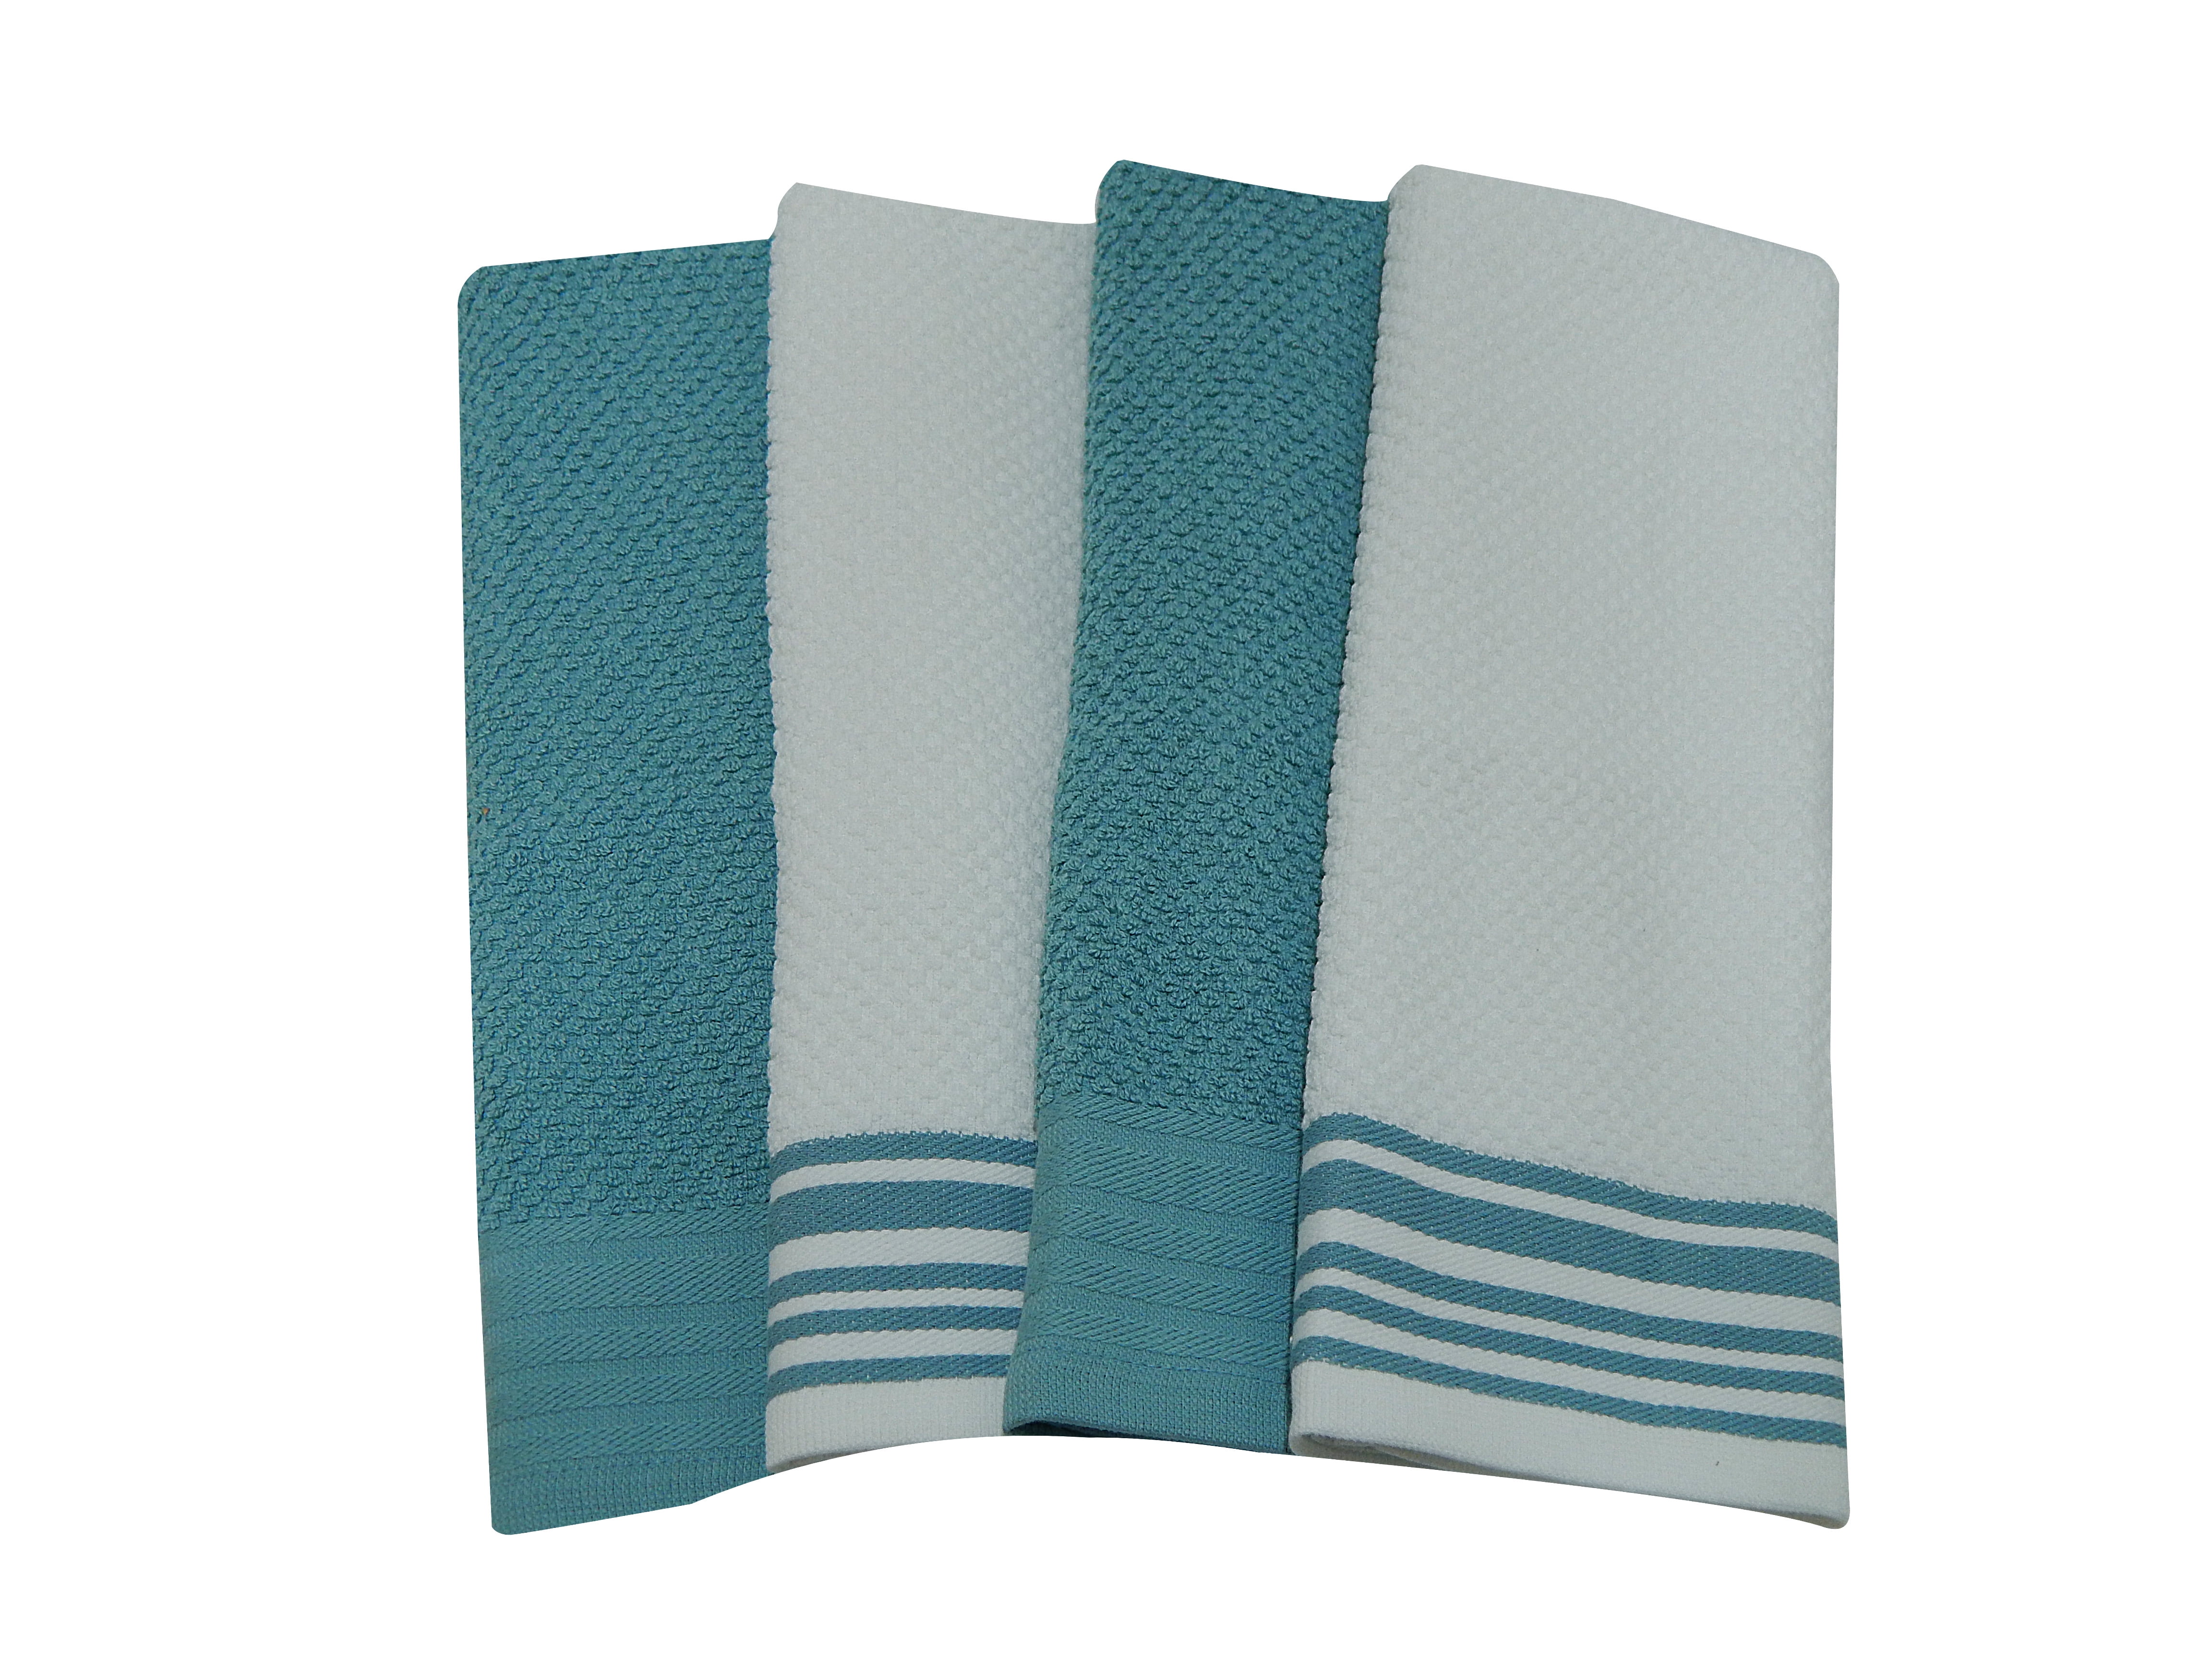  Segard Kitchen Towels Dish Towel Set of 4,Autumn Teal